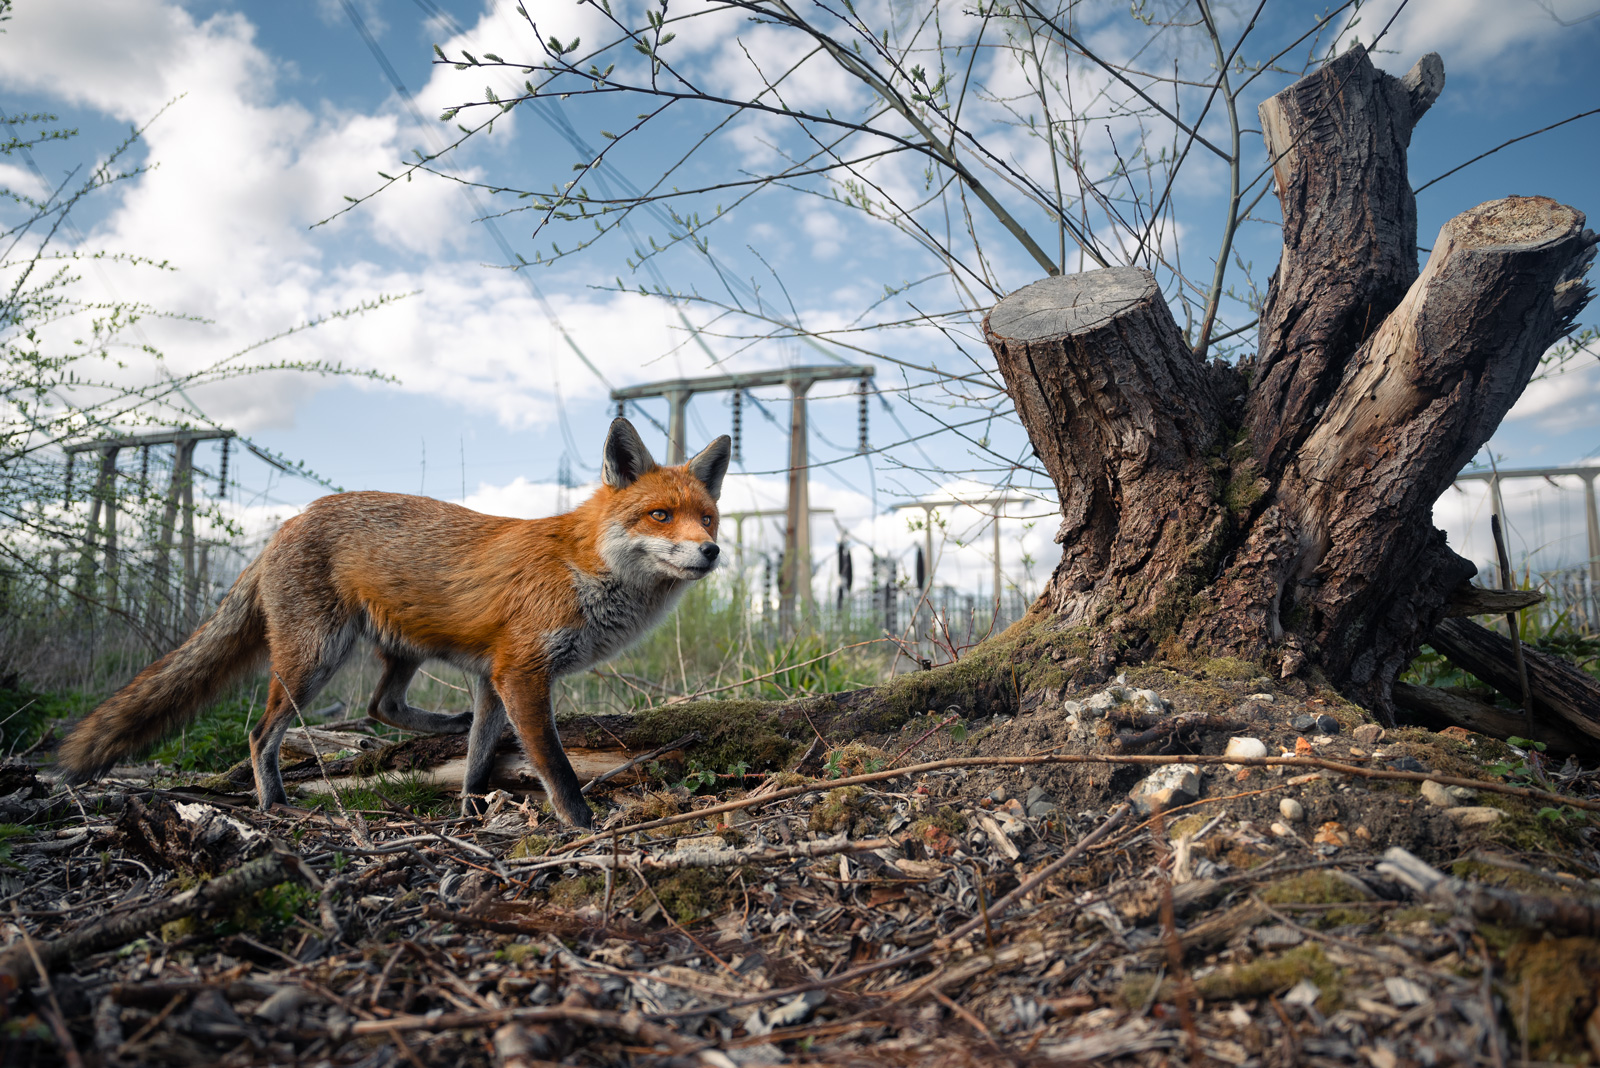 A fox prowling